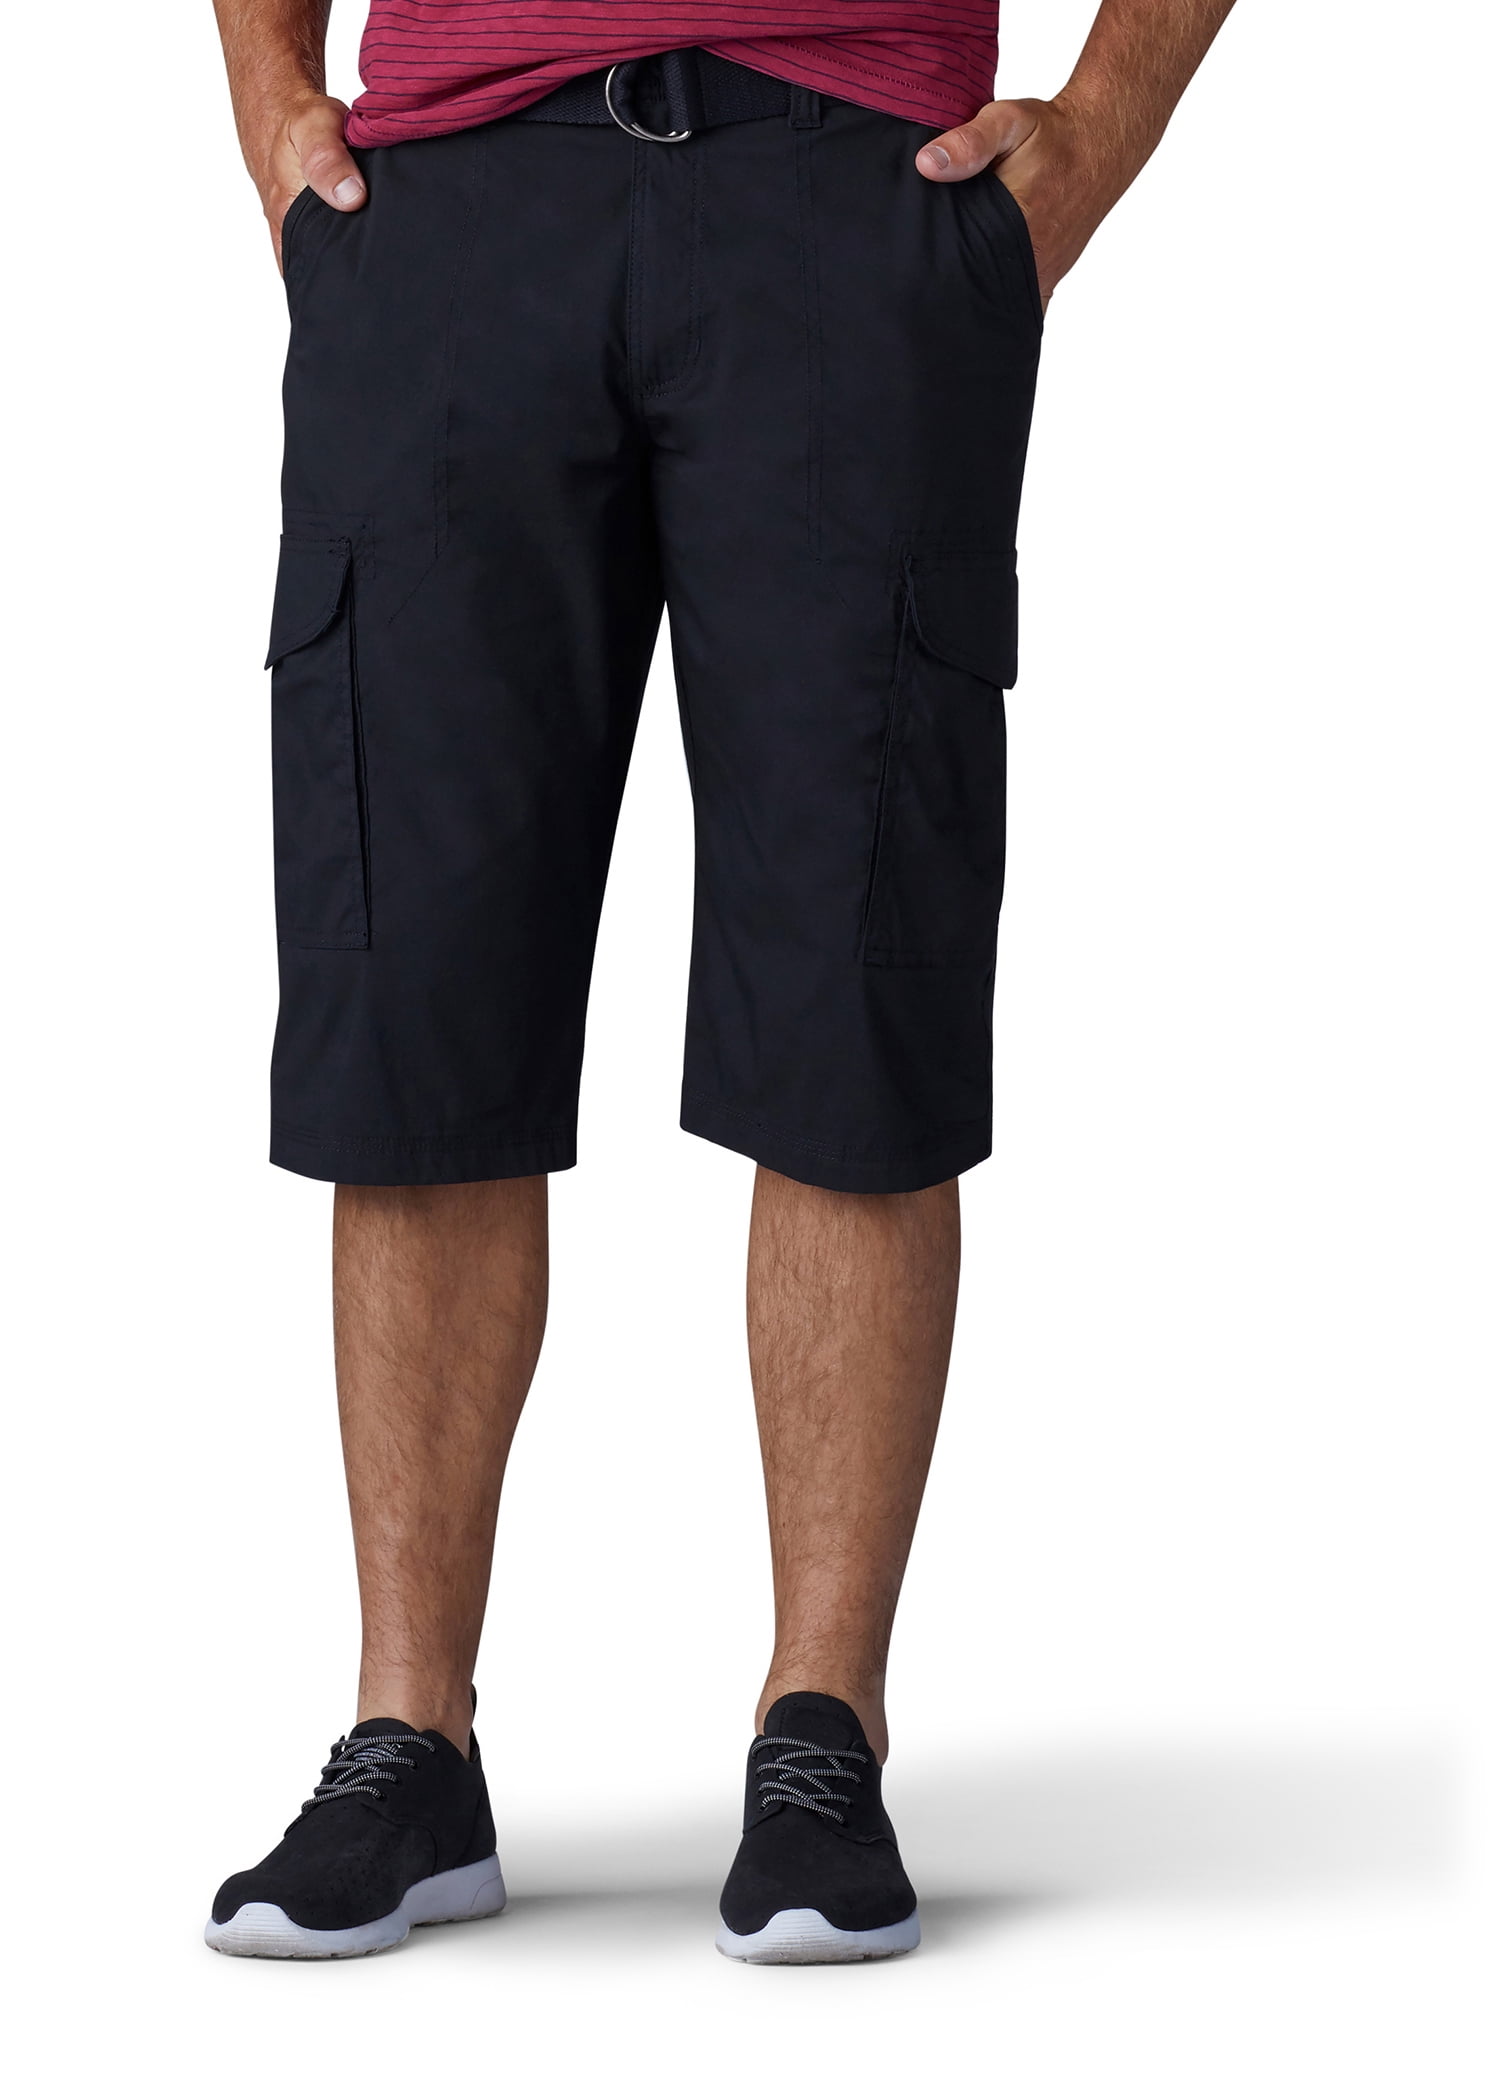 Men's Sur Cargo Shorts - Walmart.com